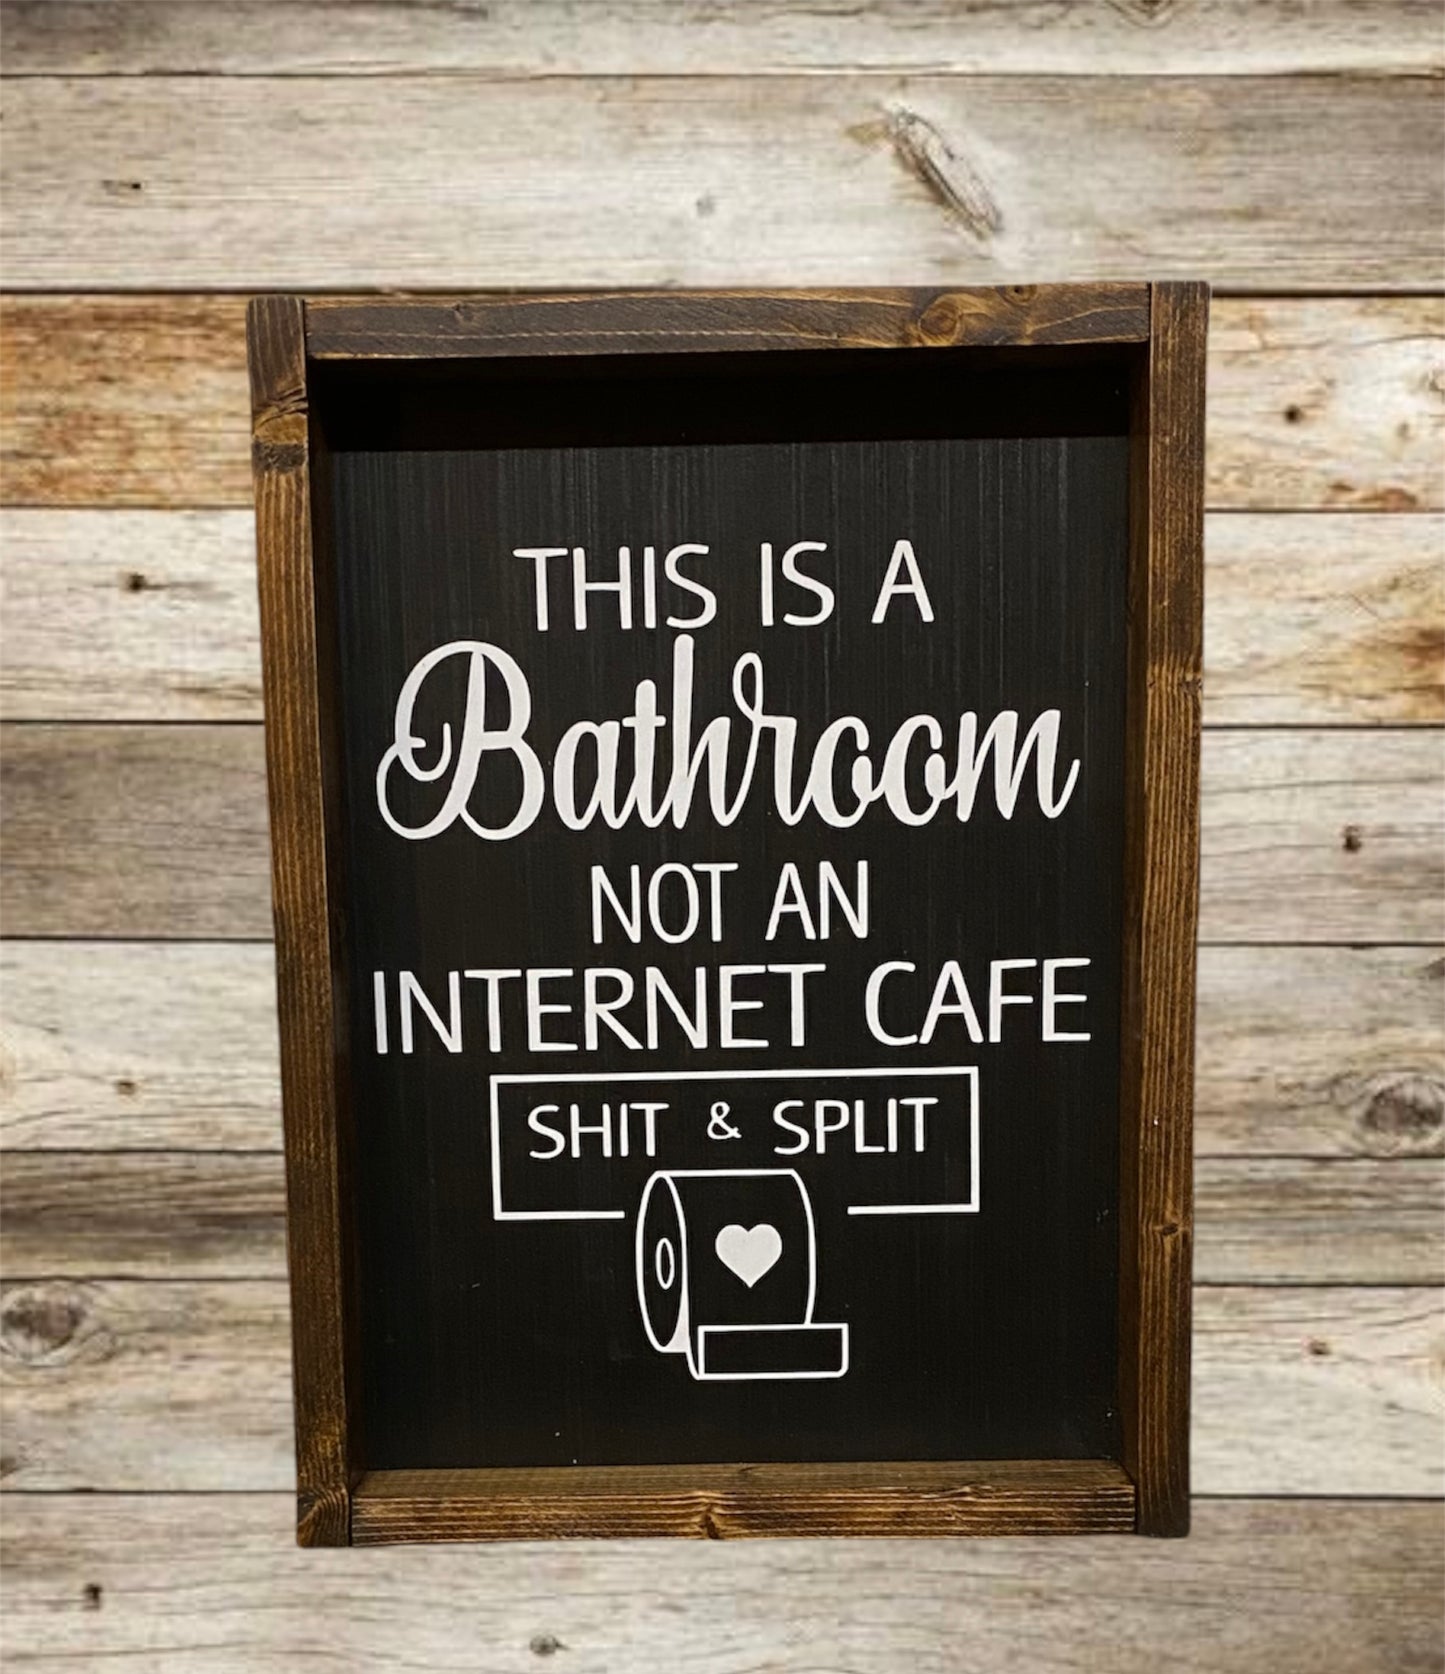 Bathroom shit and Split sign